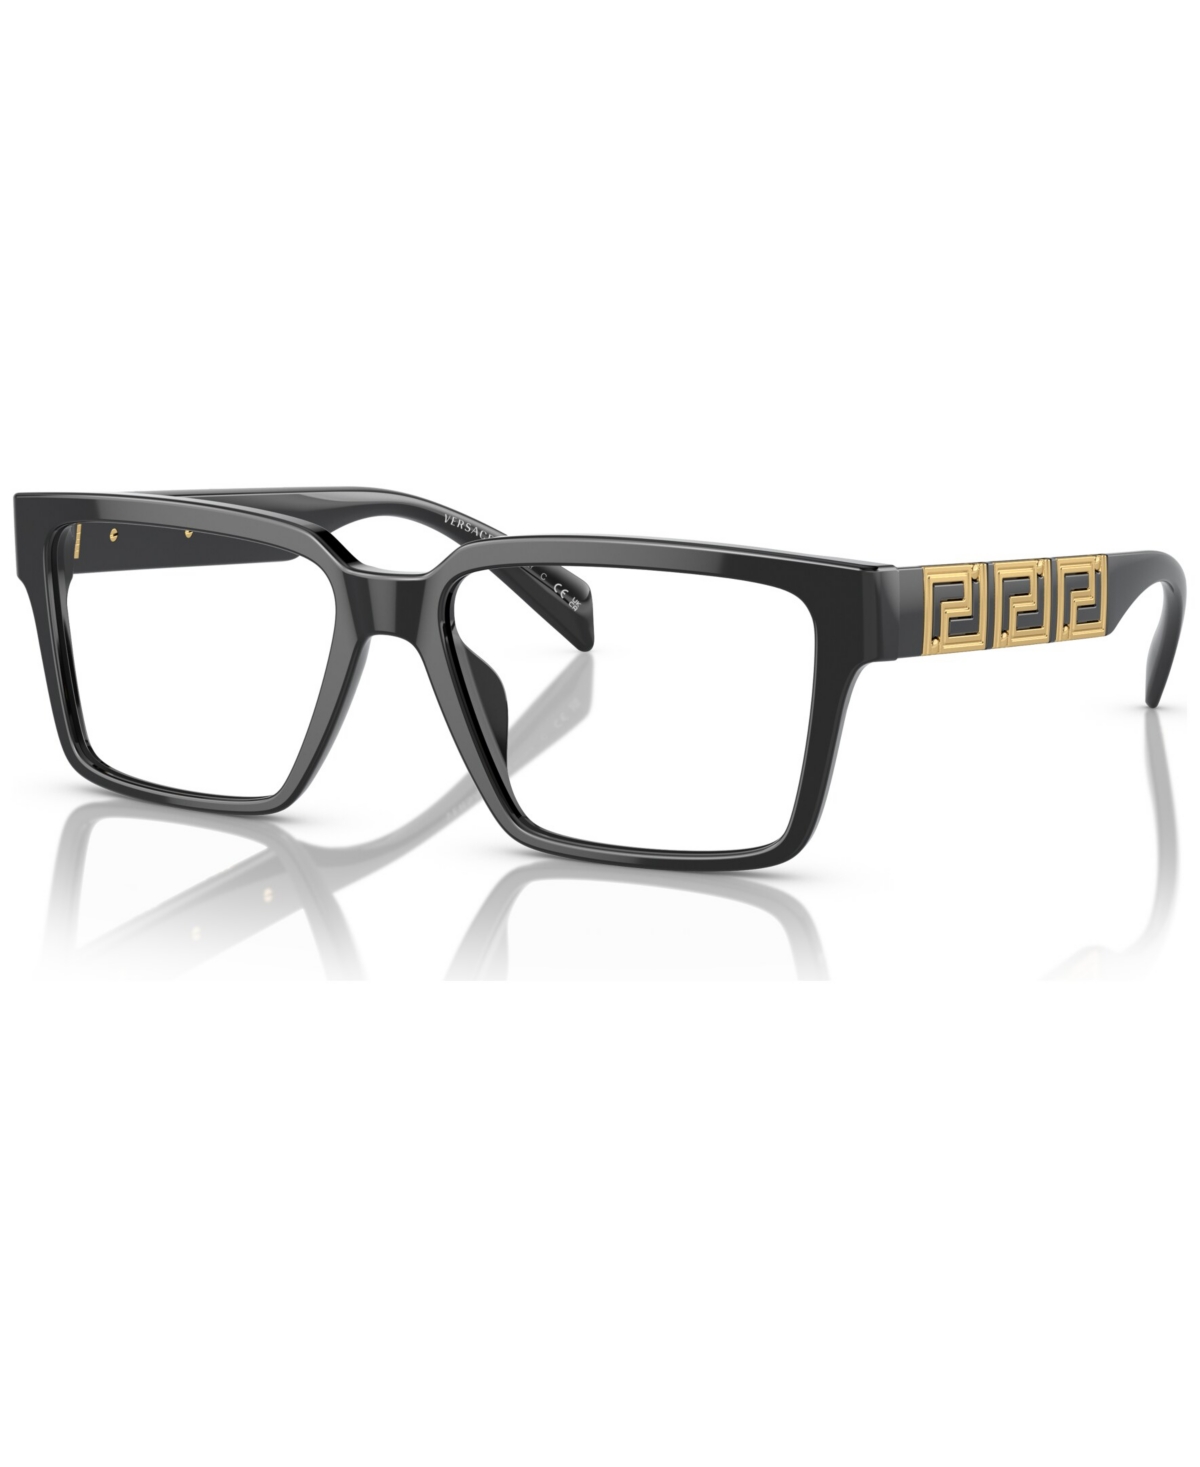 Men's Eyeglasses, VE3339U 55 - Black